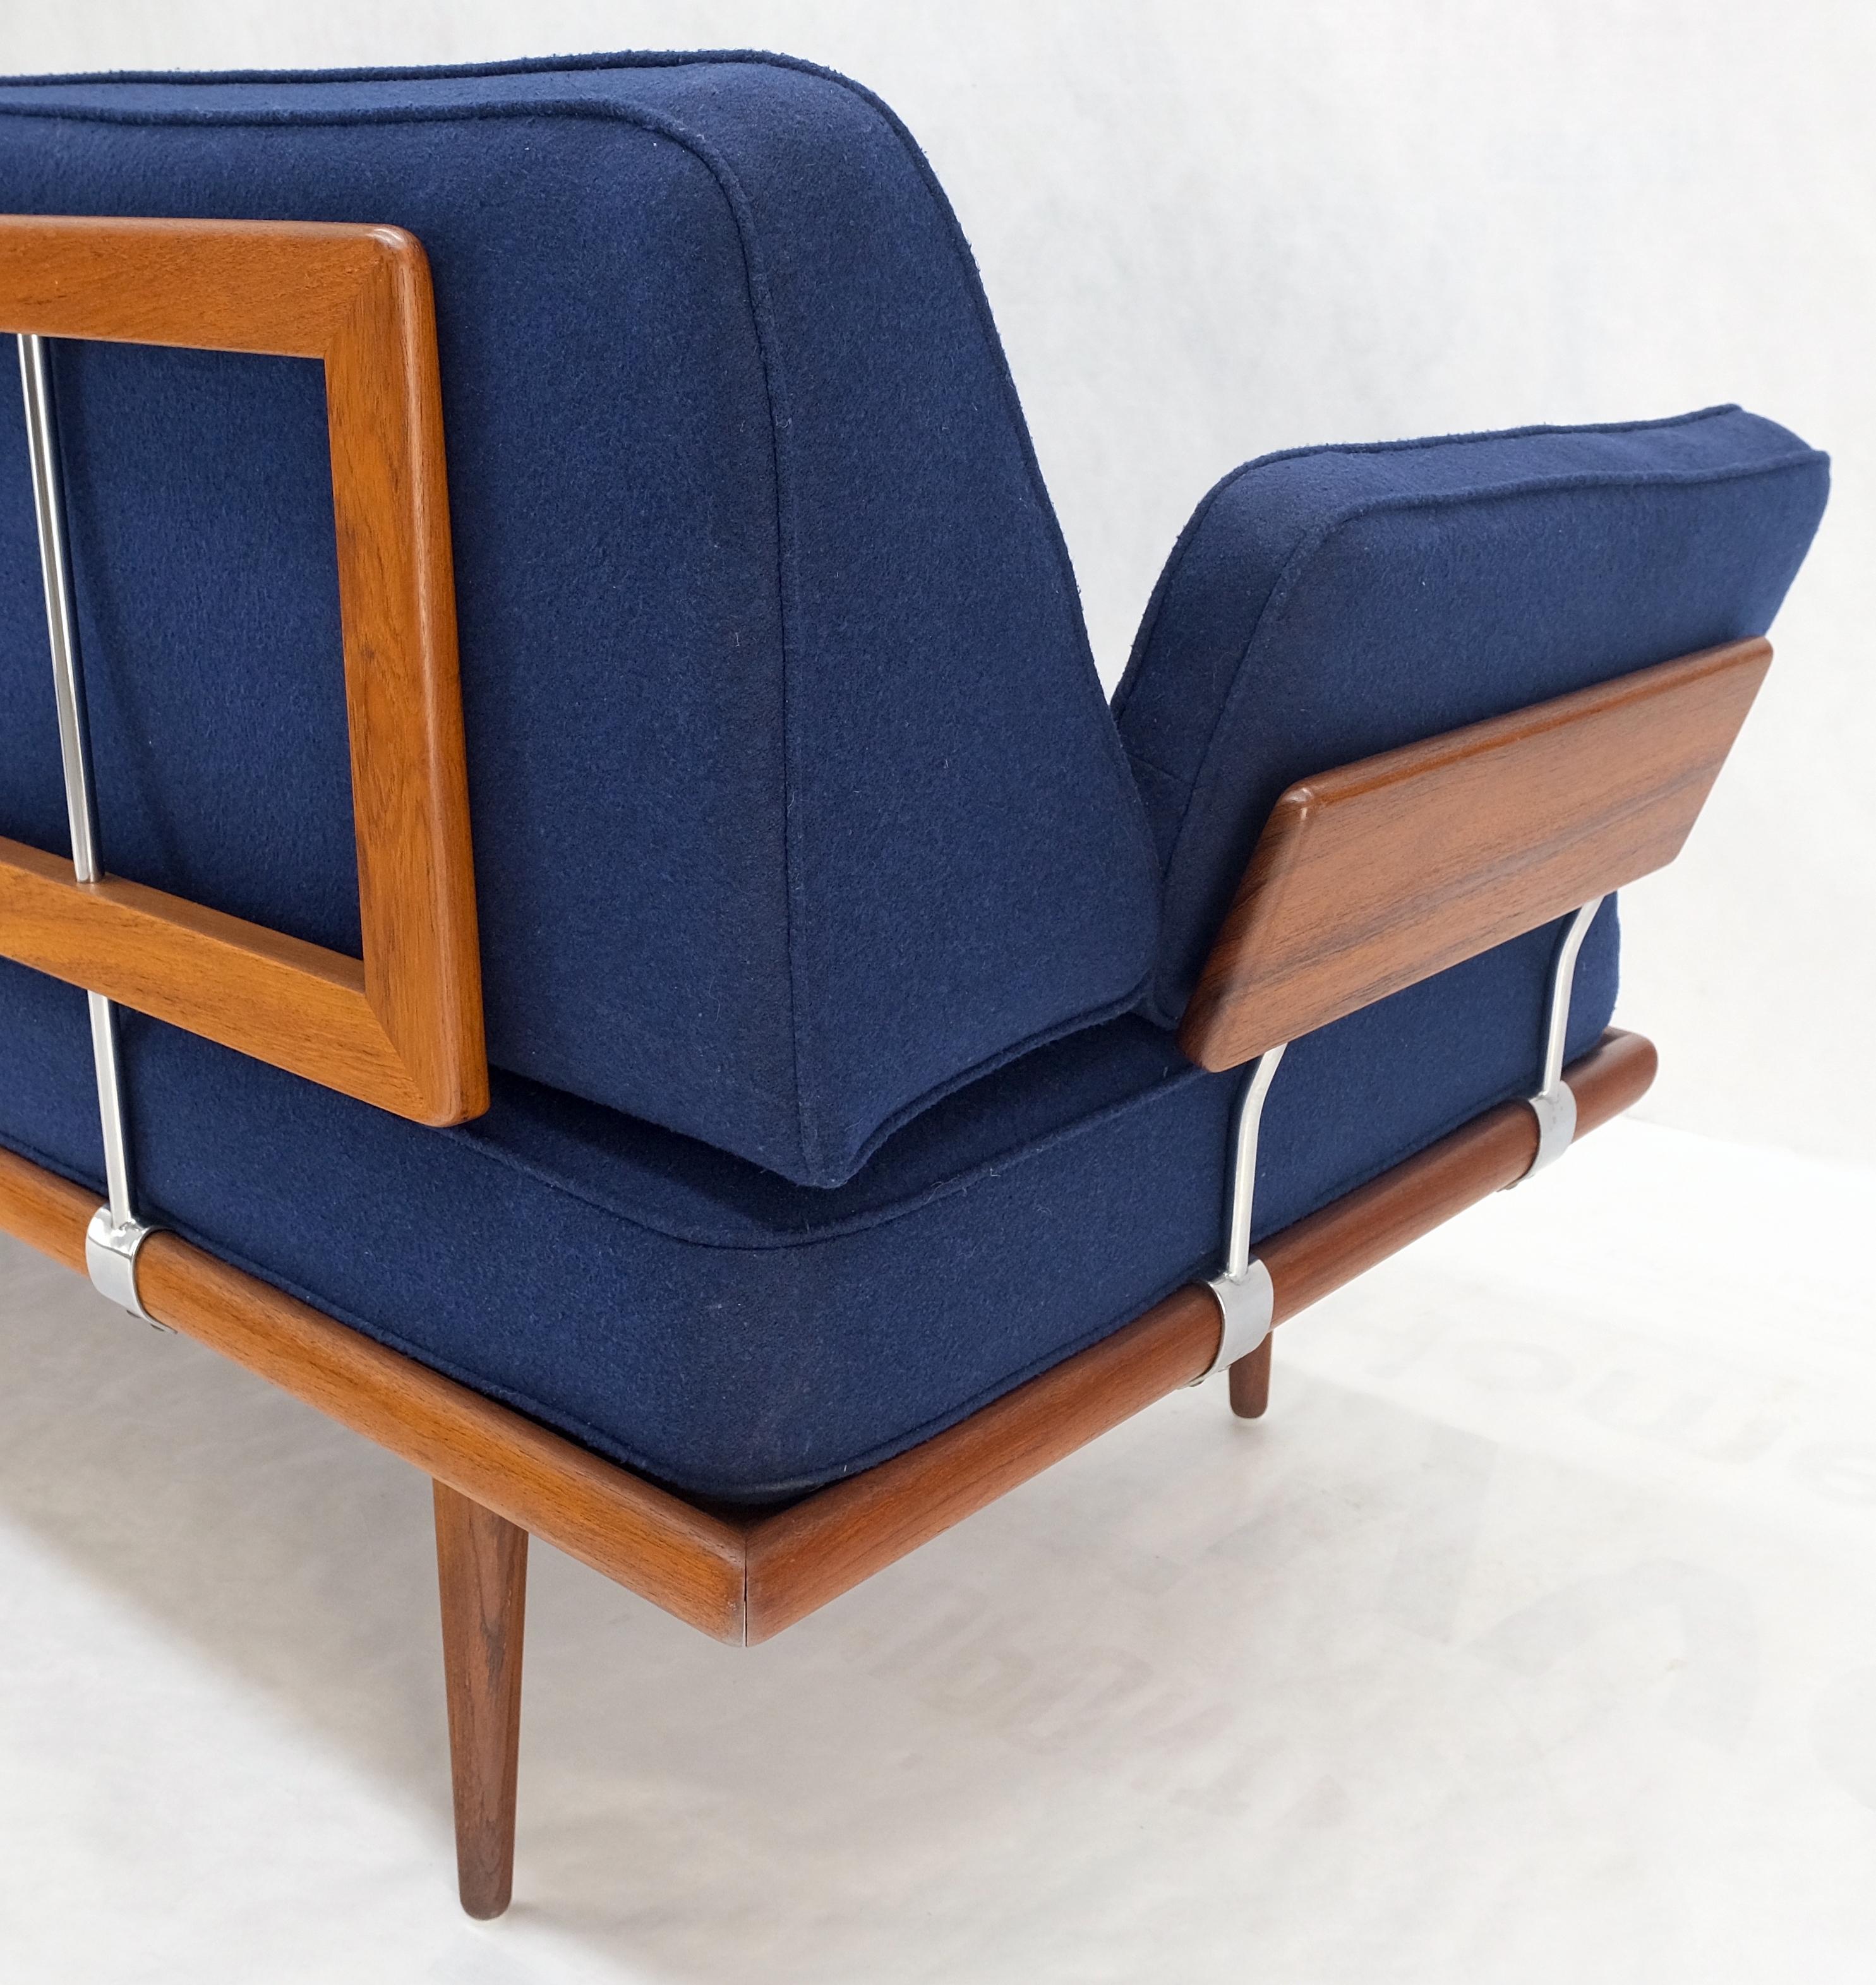 Peter Hvidt Solid Teak Sofa New Blue Wool Upholstery Original Springs Mint! For Sale 5